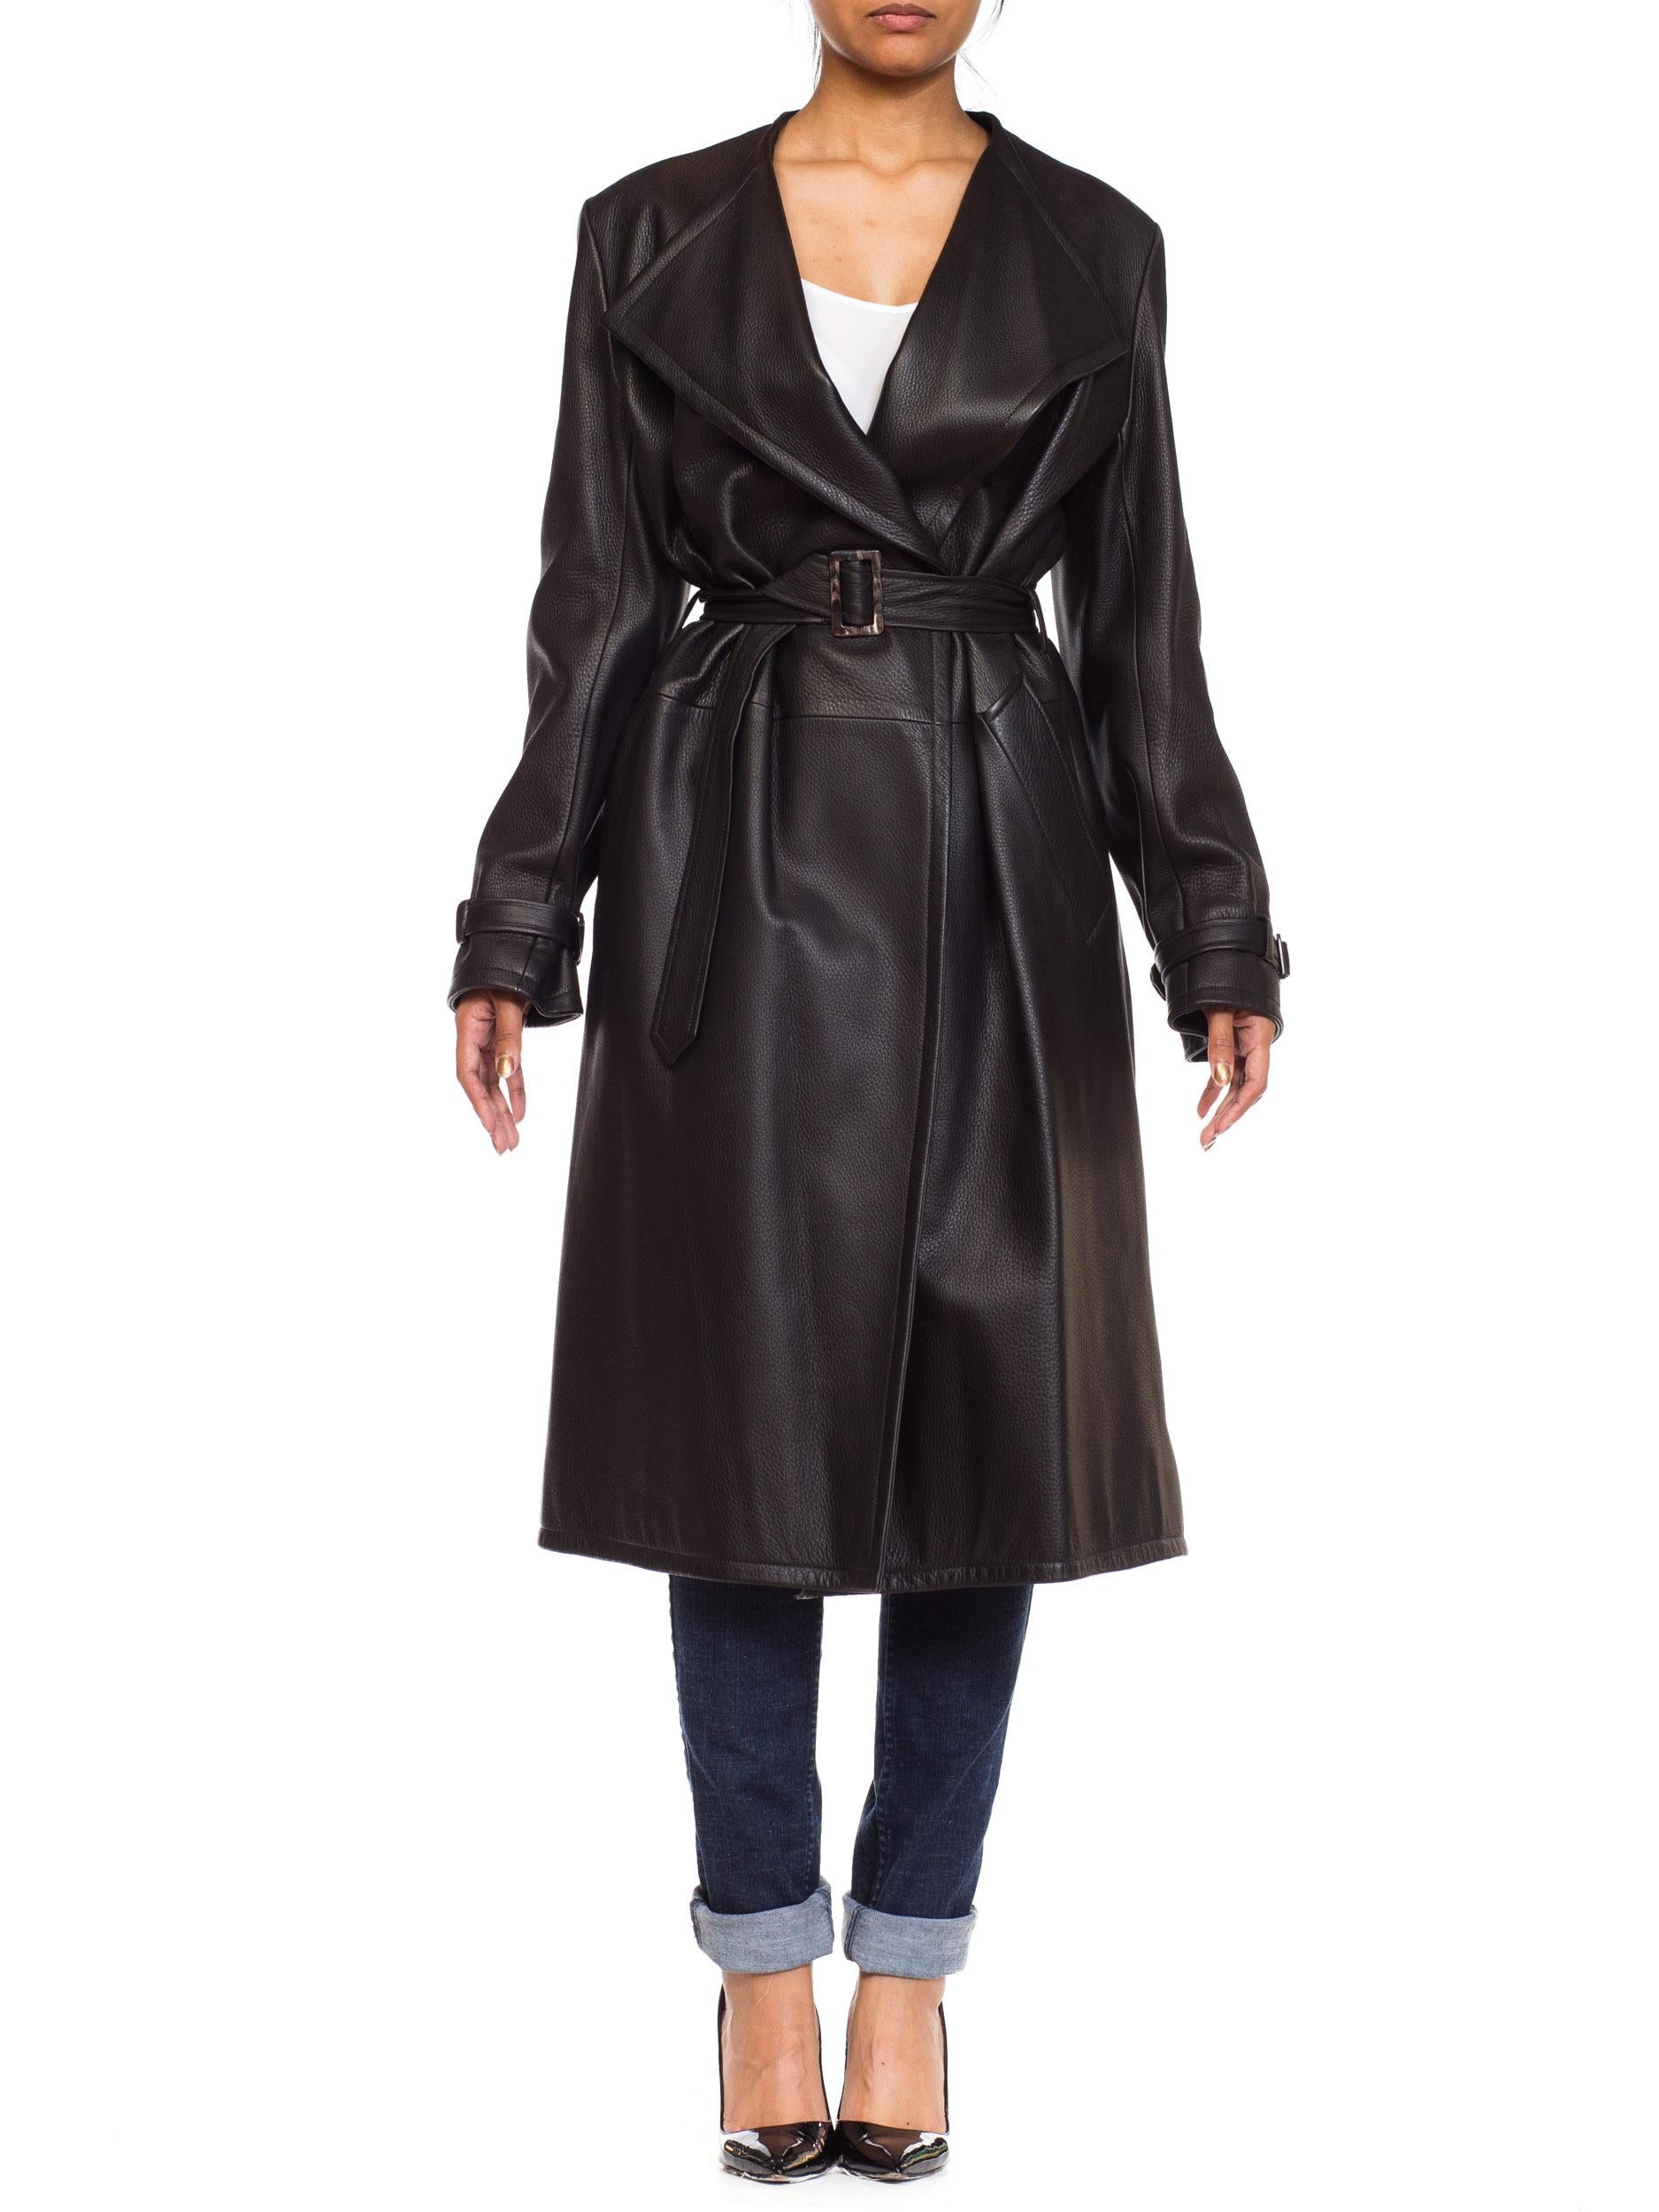 Margiela Hermes Luxe Minimalist Leather Trenchcoat  10